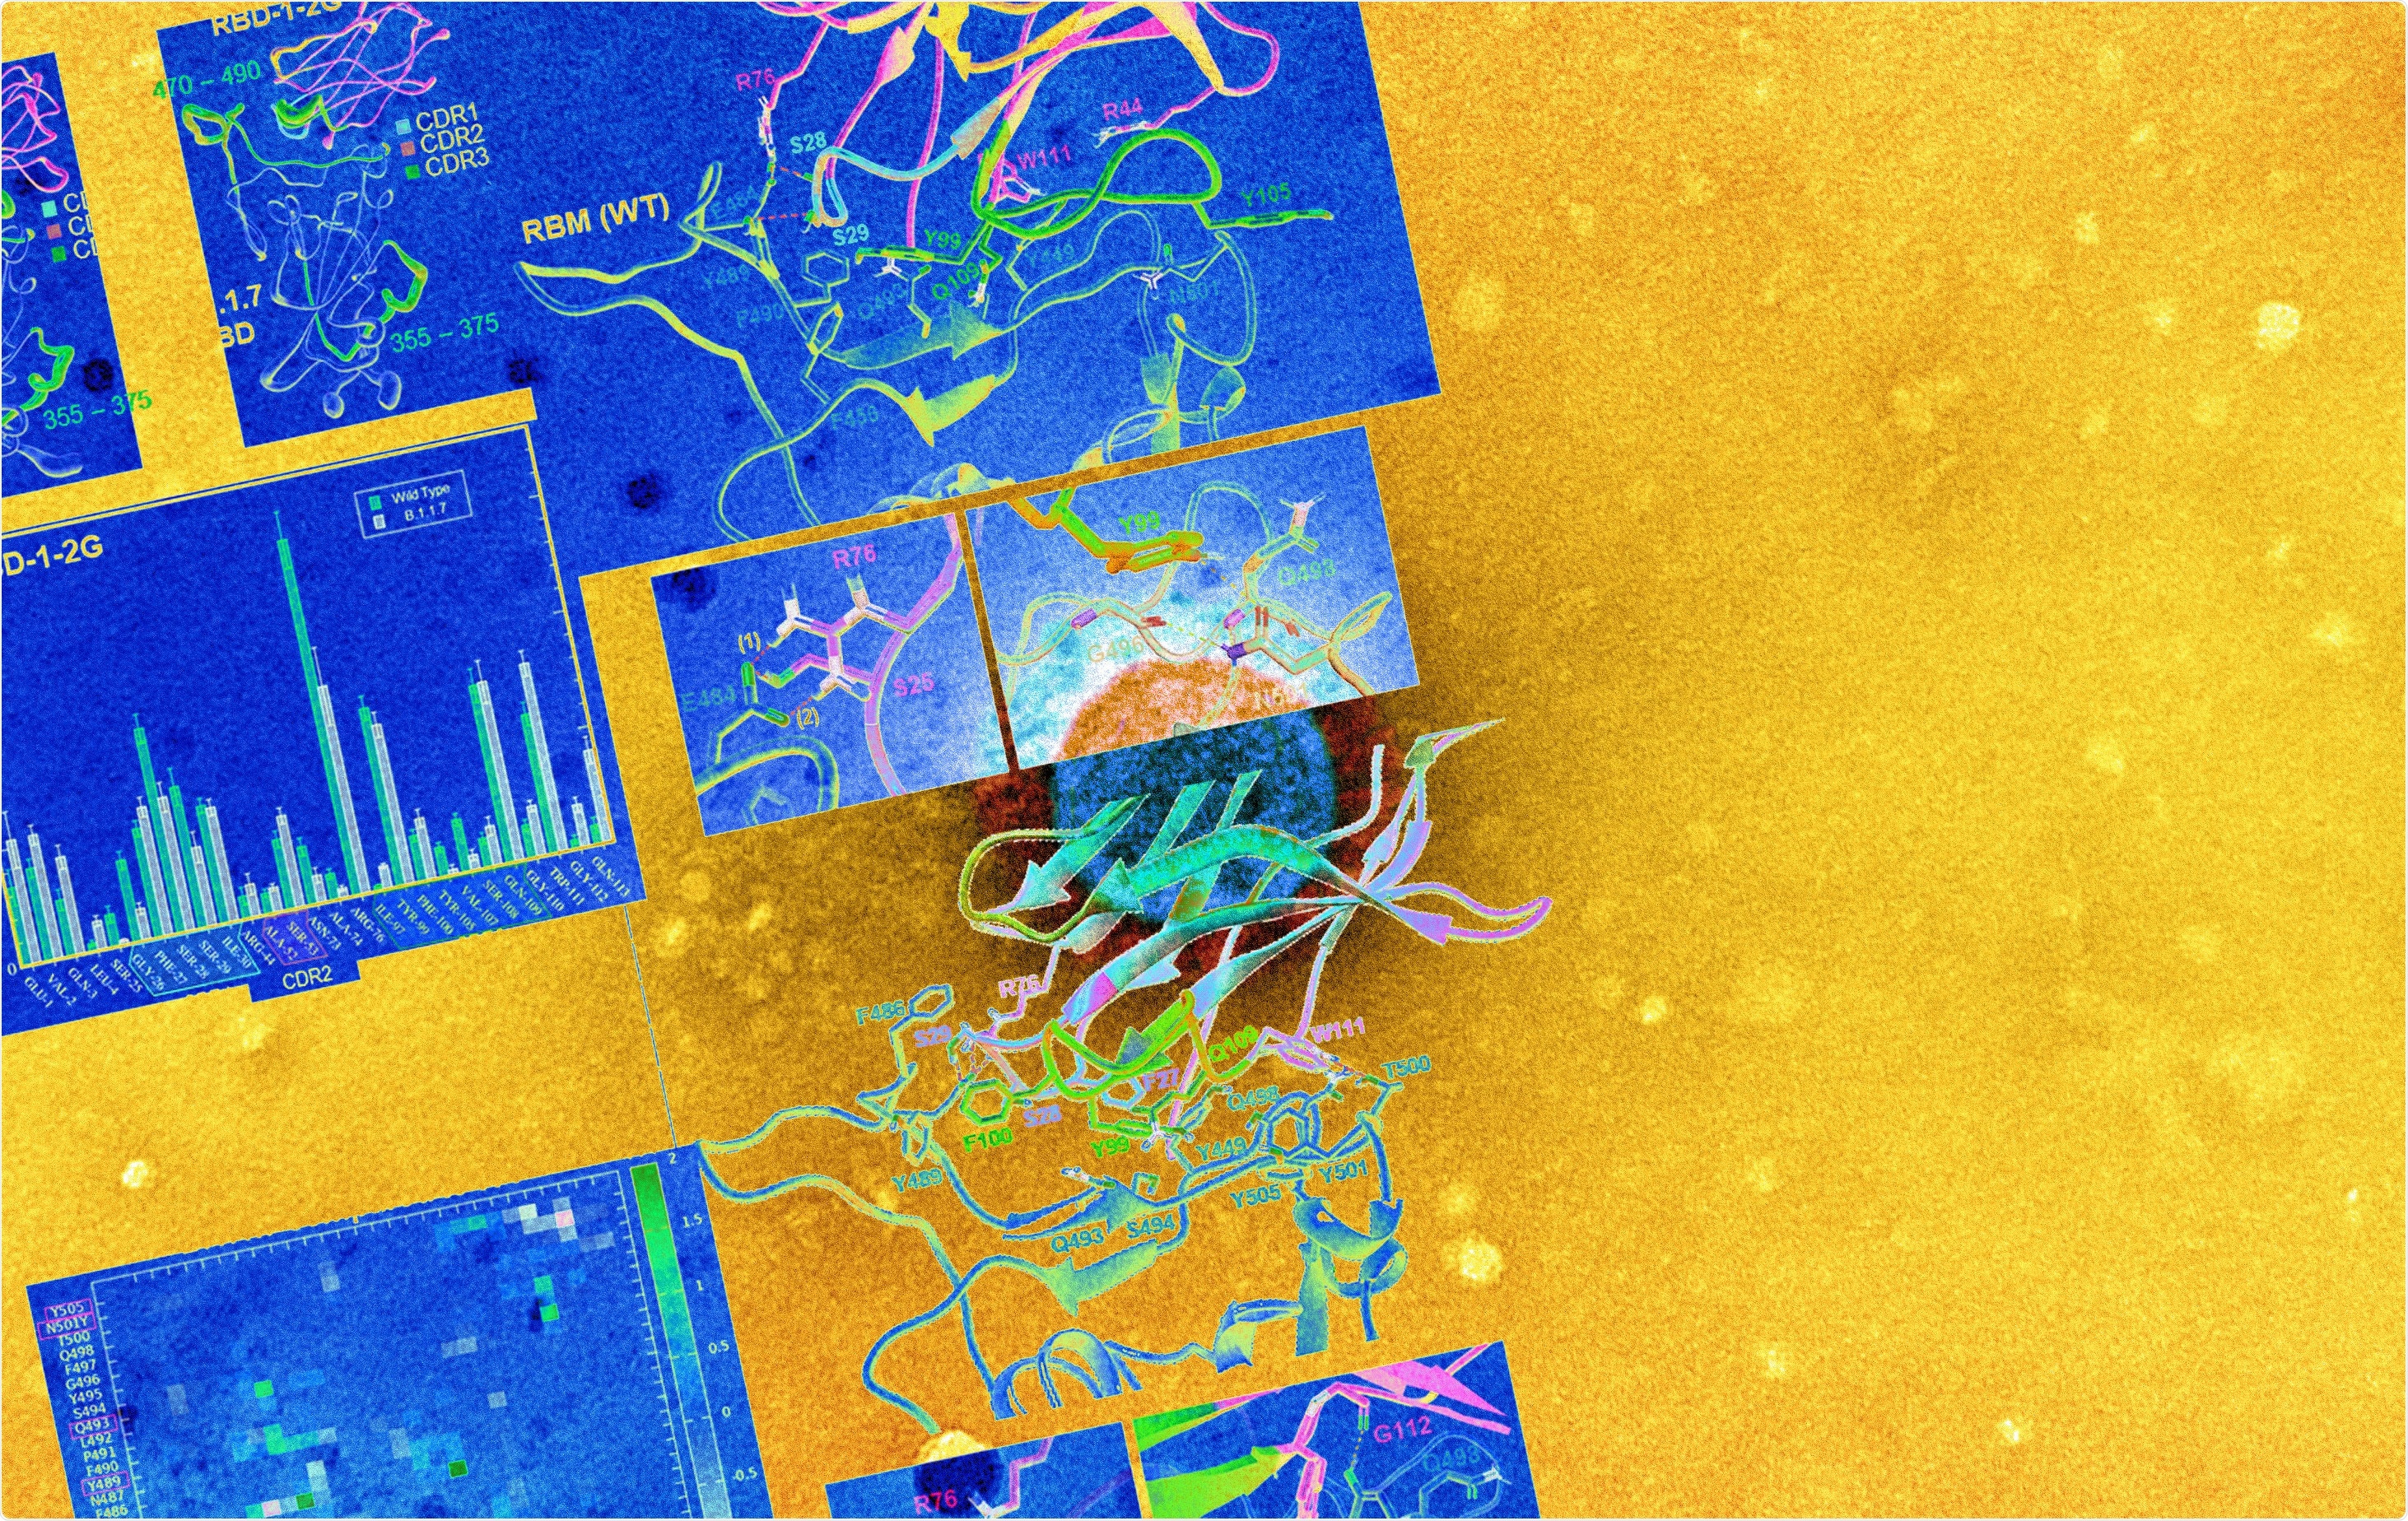 Study: The humanized nanobody RBD-1-2G tolerates the spike N501Y mutation to neutralize SARS-CoV-2. Image Credit: NIAID